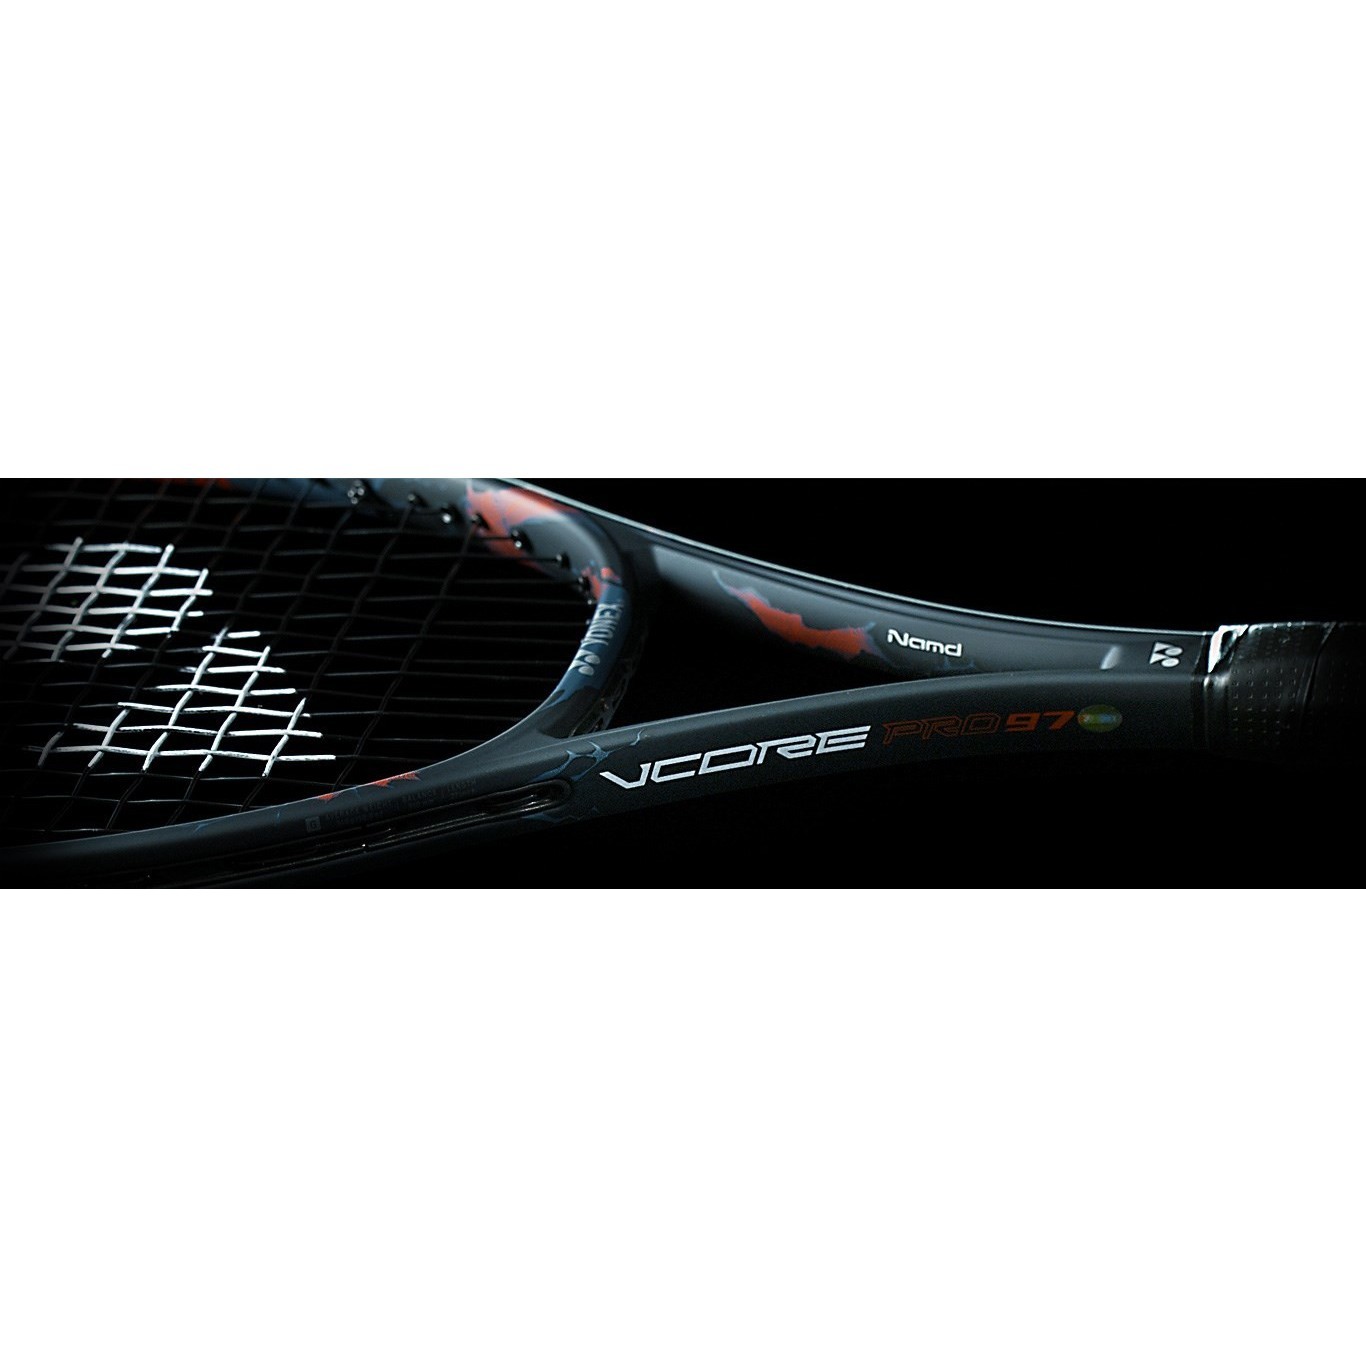 Ракетка для большого тенниса YONEX Vcore Pro